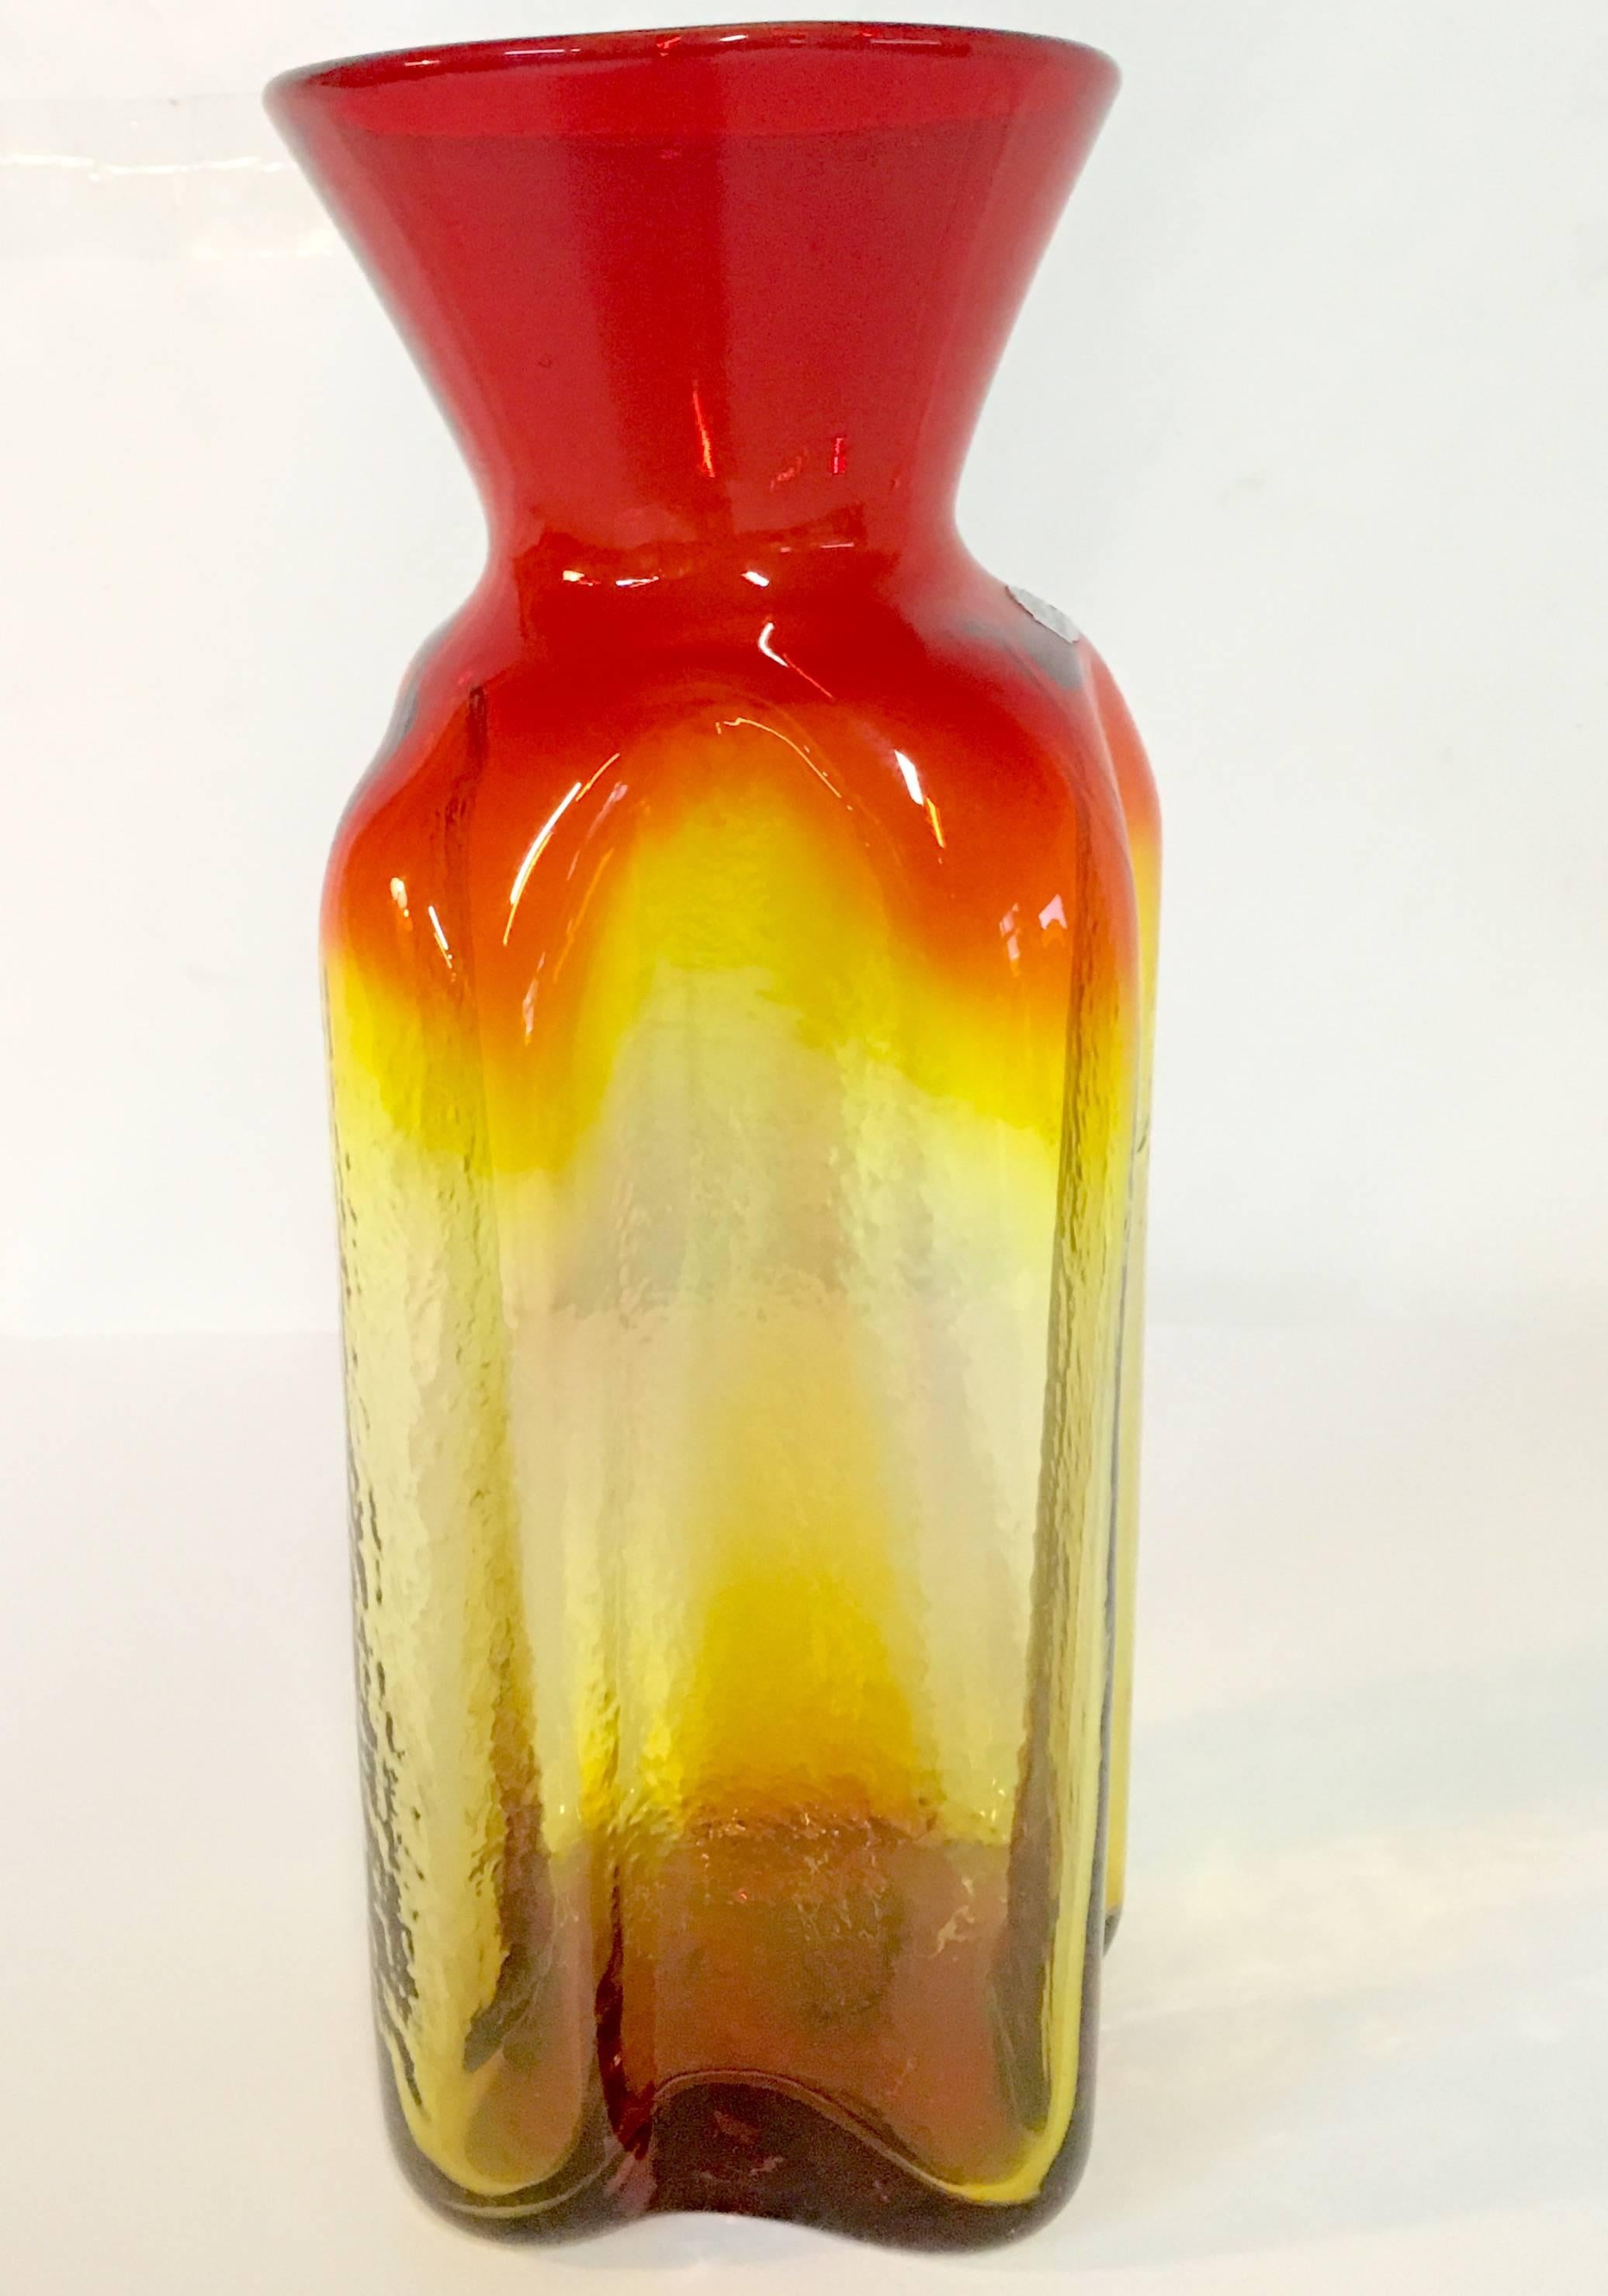 Large Blenko handblown glass tangerine four sided indent vase. Designed by, Wayne Husted, between 1952-1963. Silver "Blenko Handcrafted" sticker still intact. Pontil makers mark on the underside.